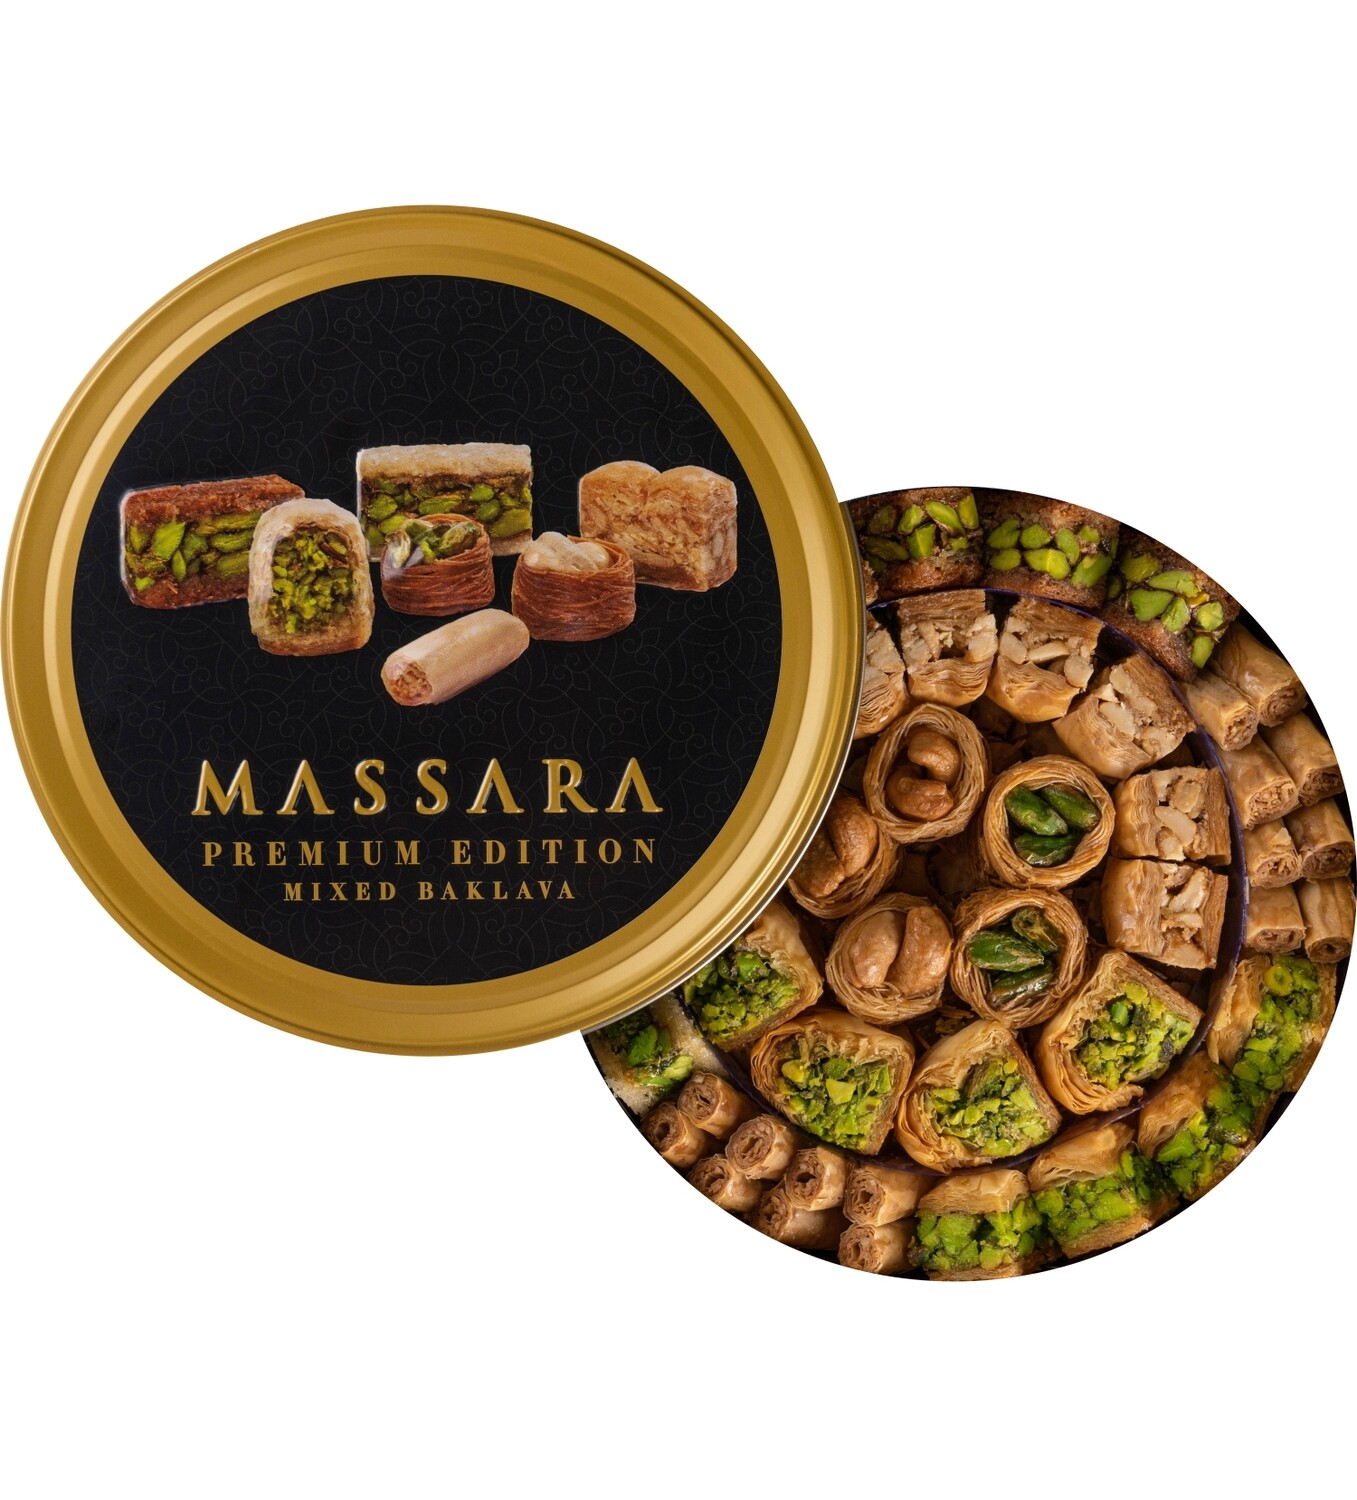 MASSARA Premium Edition Mixed Baklava (Vegan)